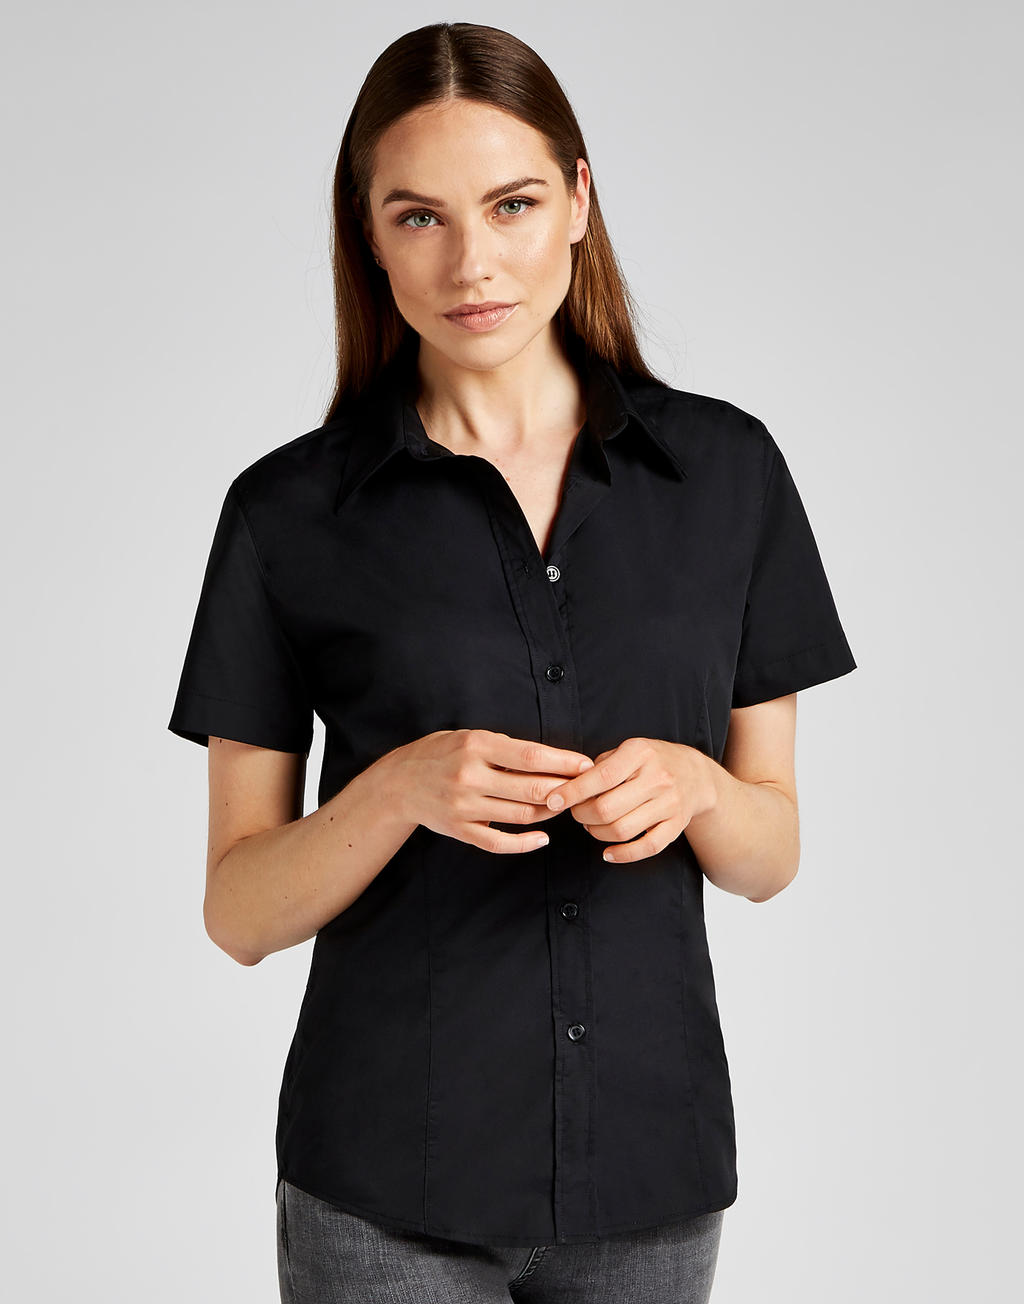 Women's Classic Fit Workforce Shirt